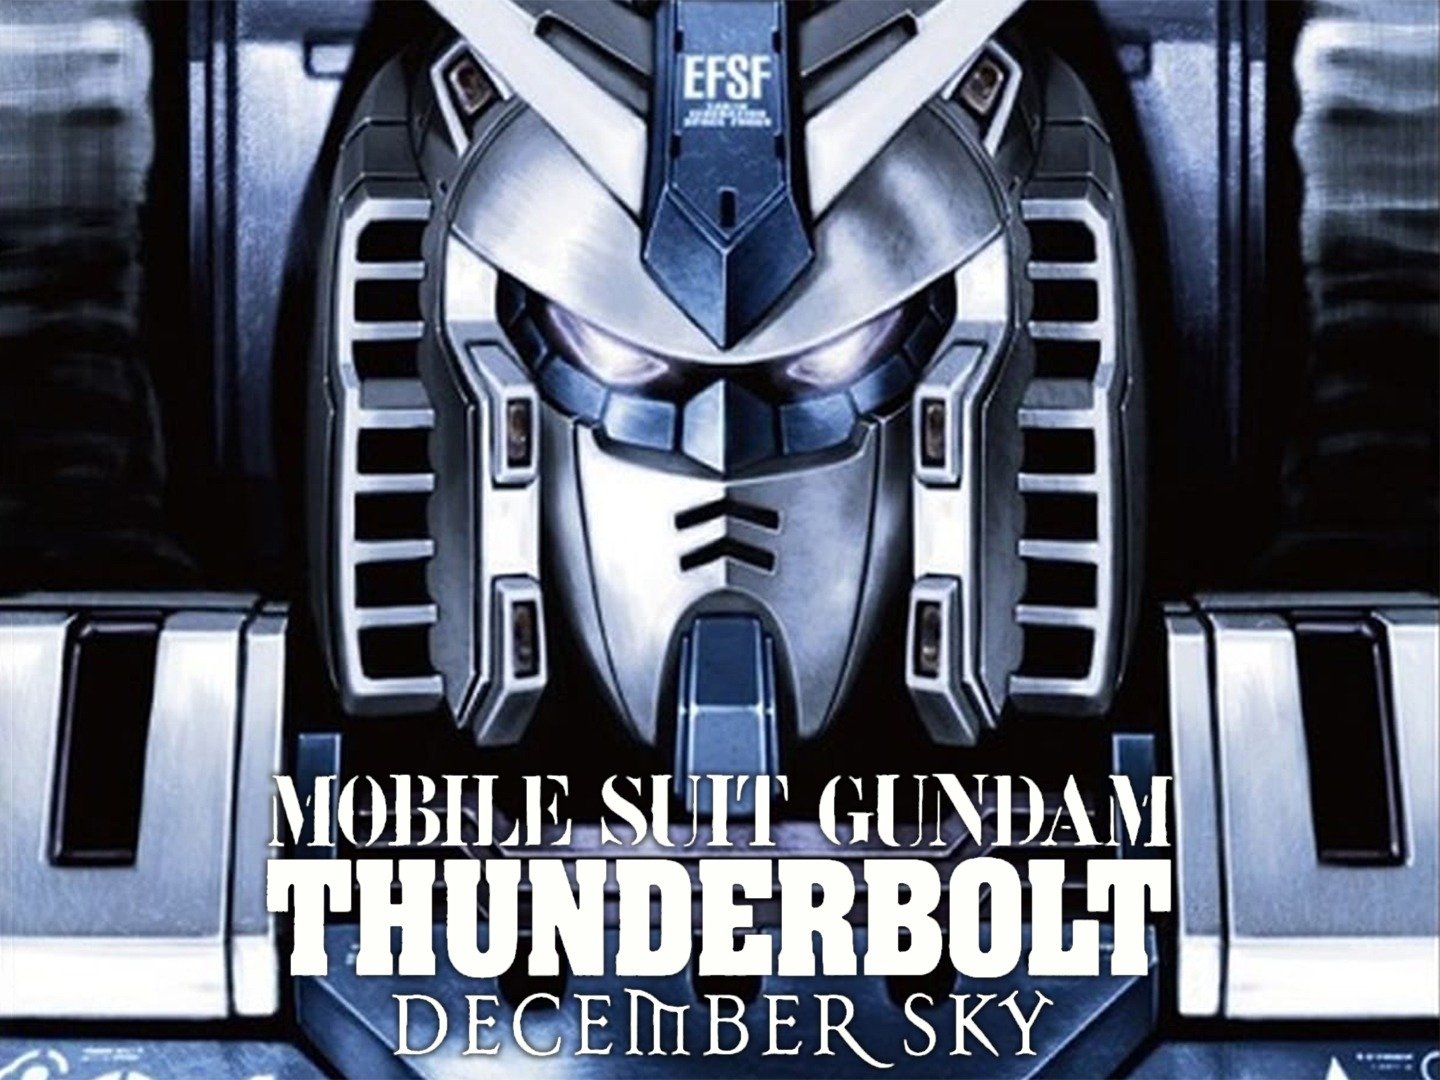 Mobile Suit Gundam Thunderbolt December Sky Movietickets